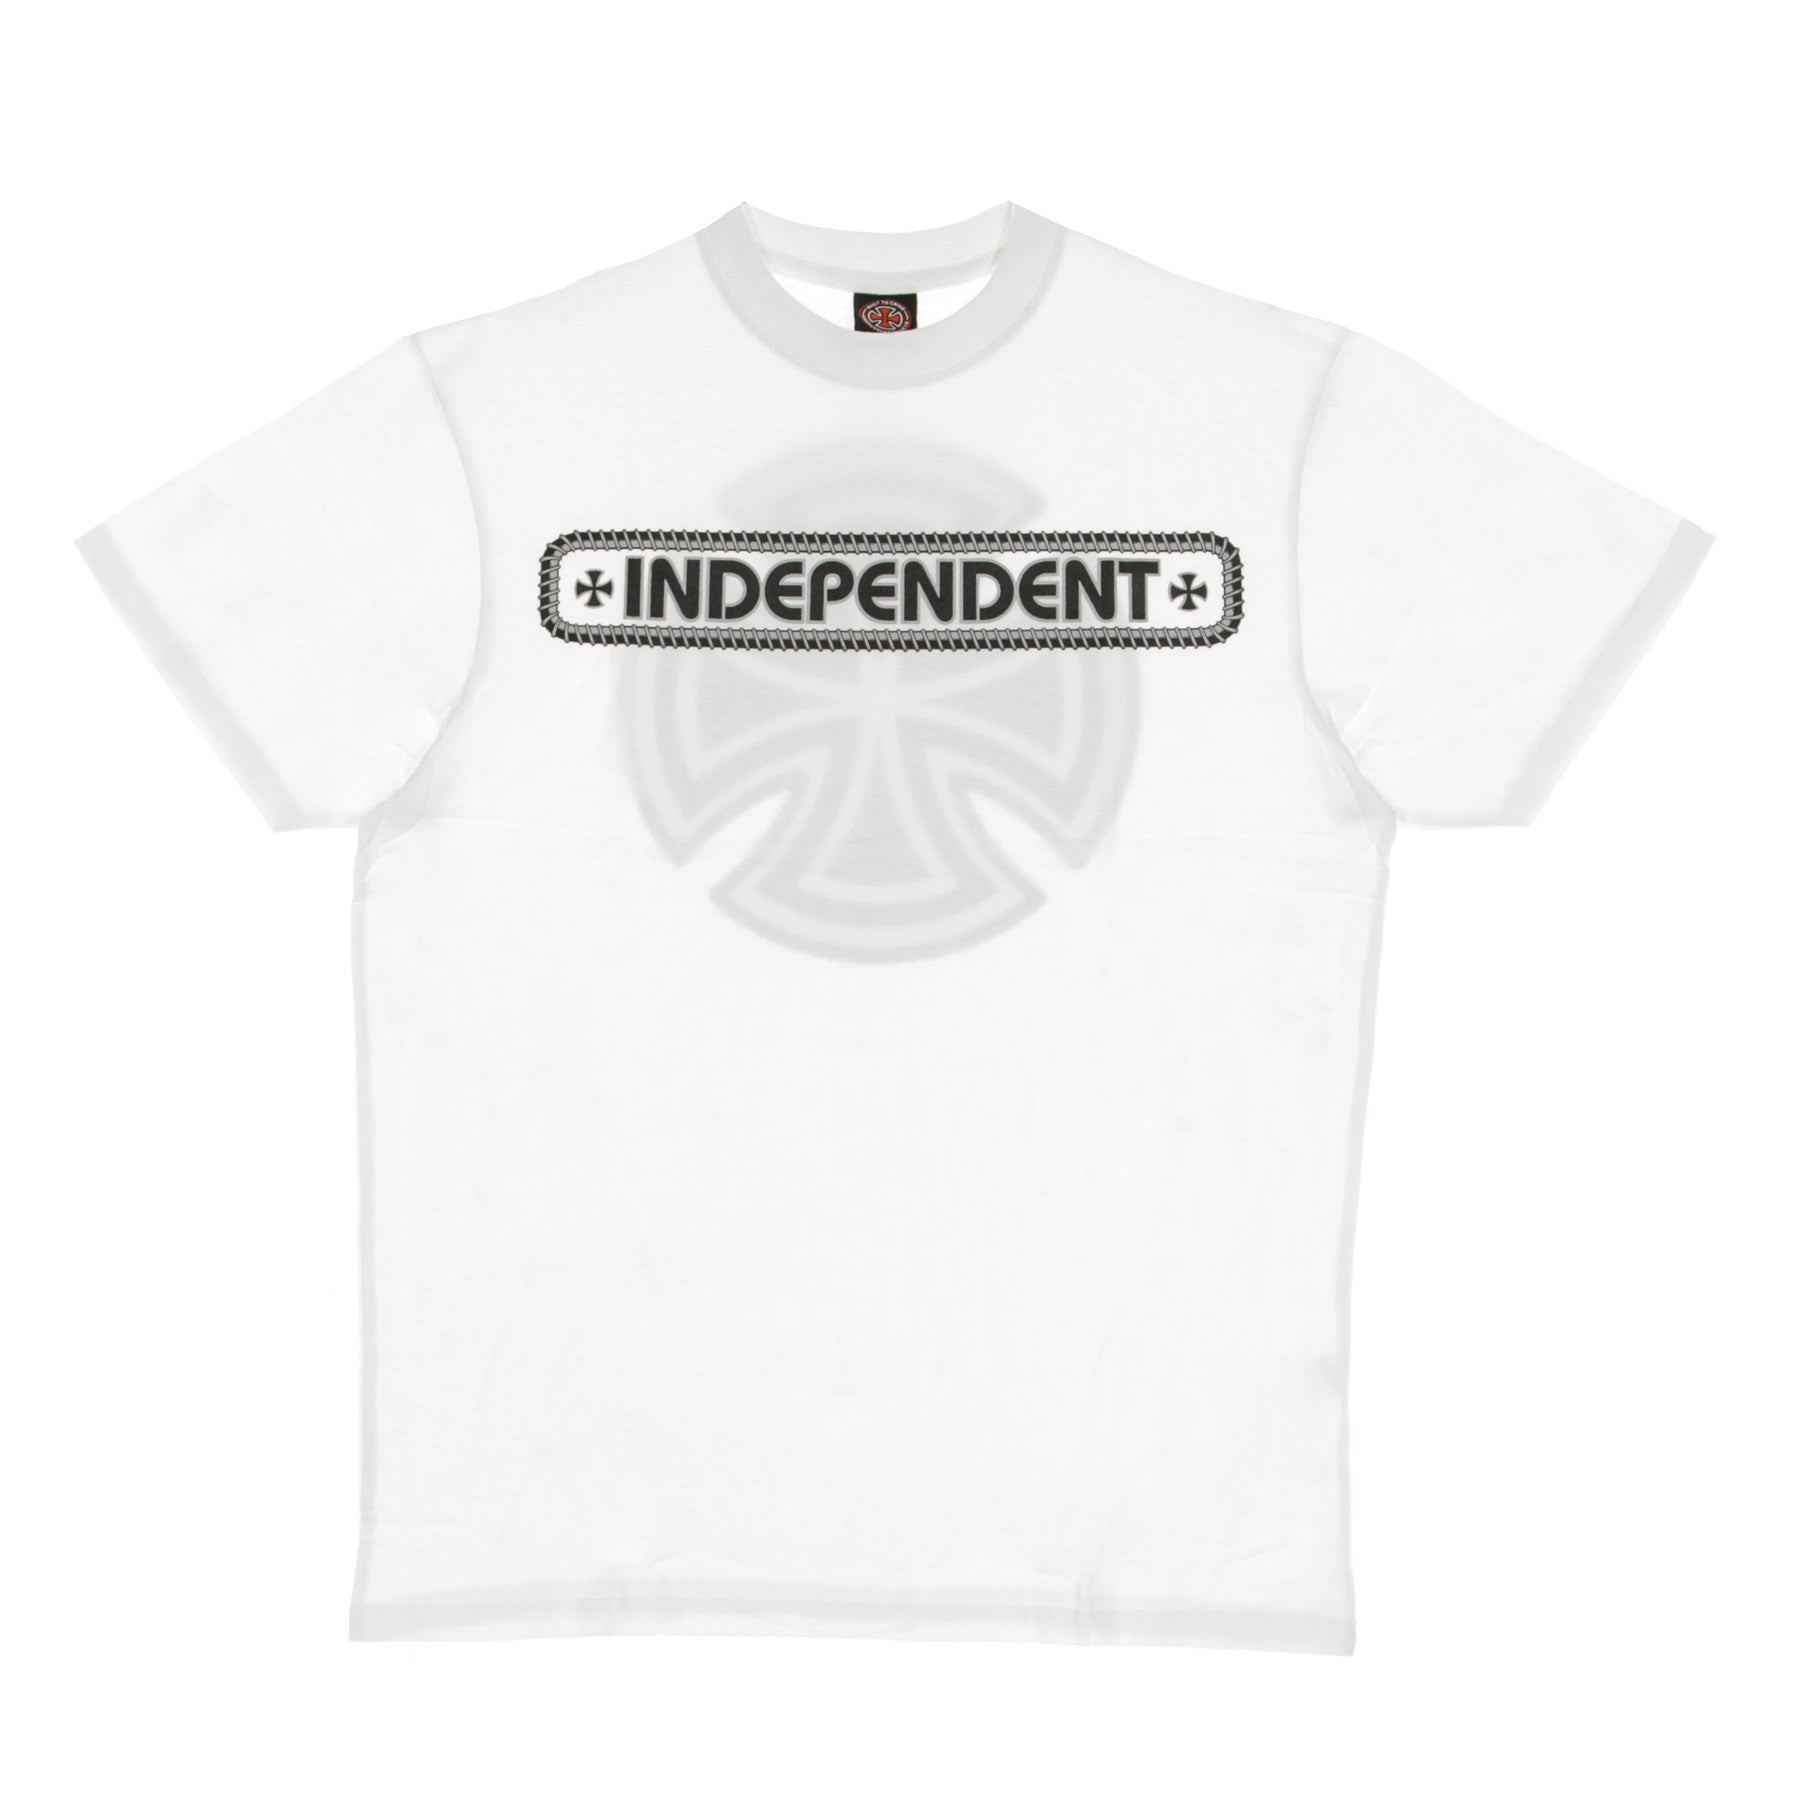 Independent, Maglietta Uomo Rebar Cross Tee, White